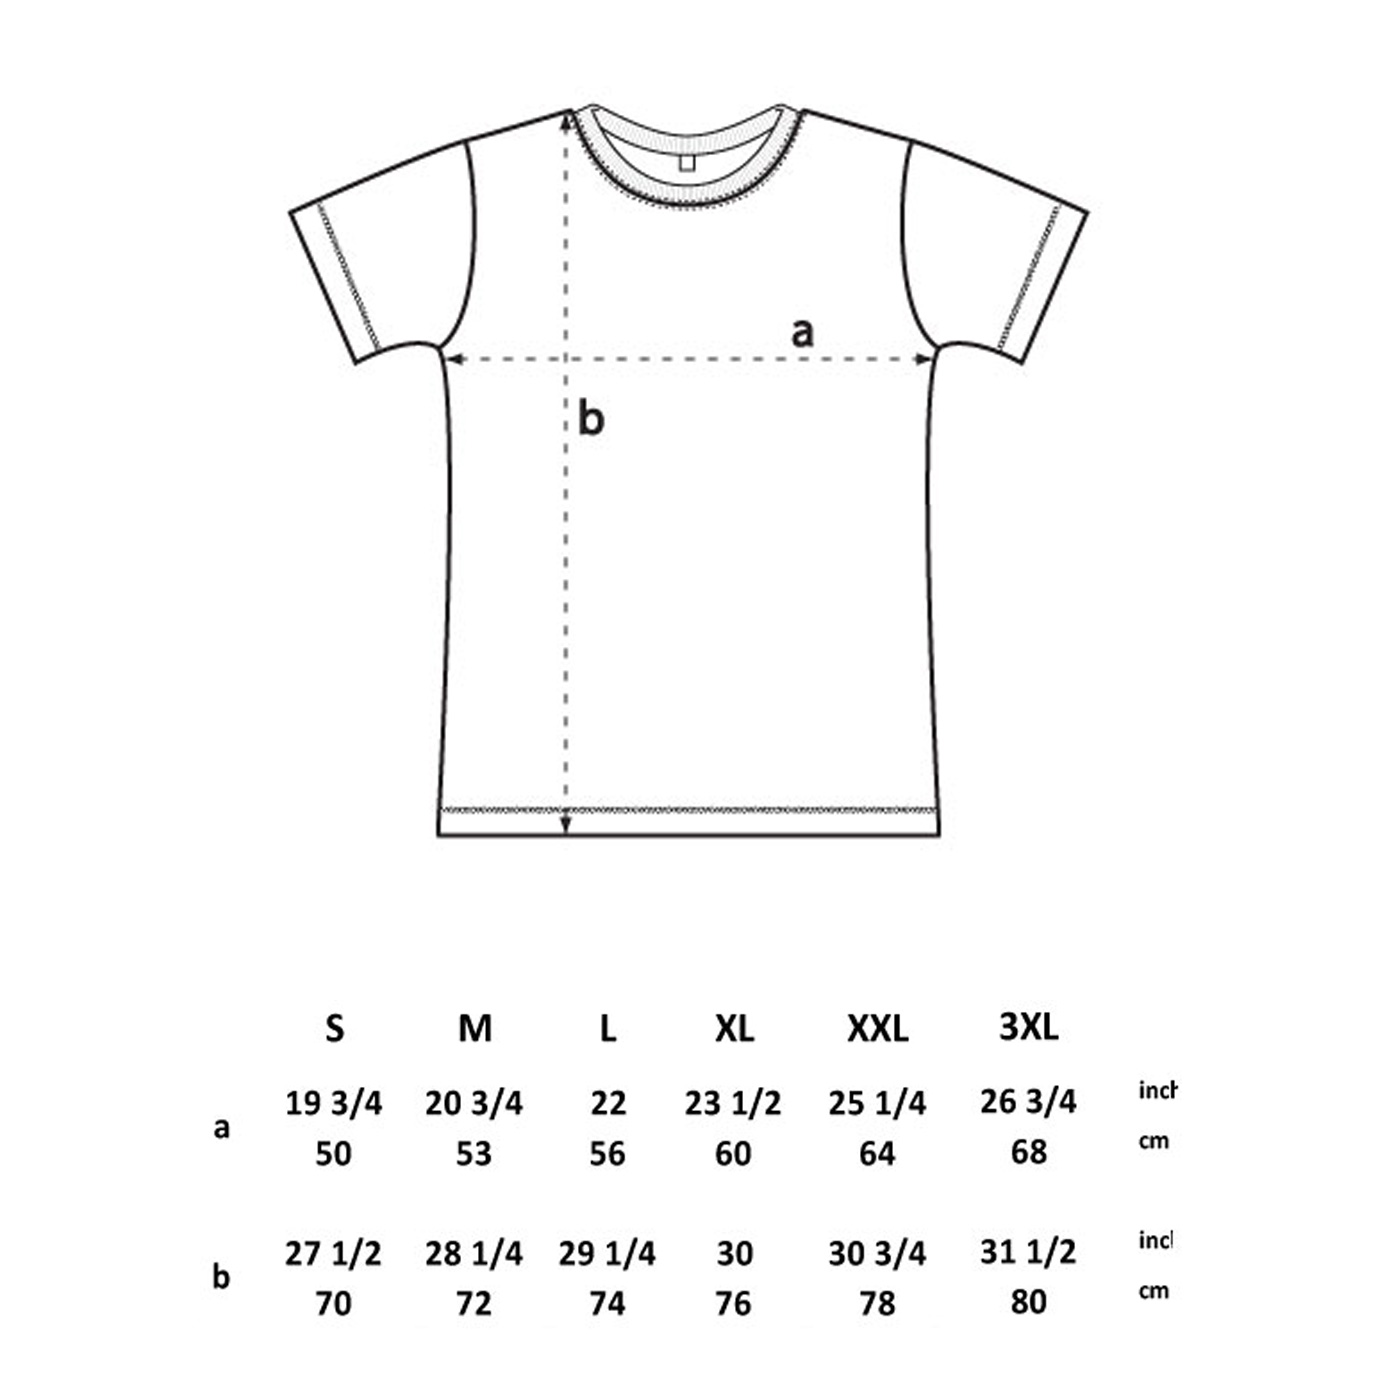 ut-Cosmic-Amazones-shirt-sizes